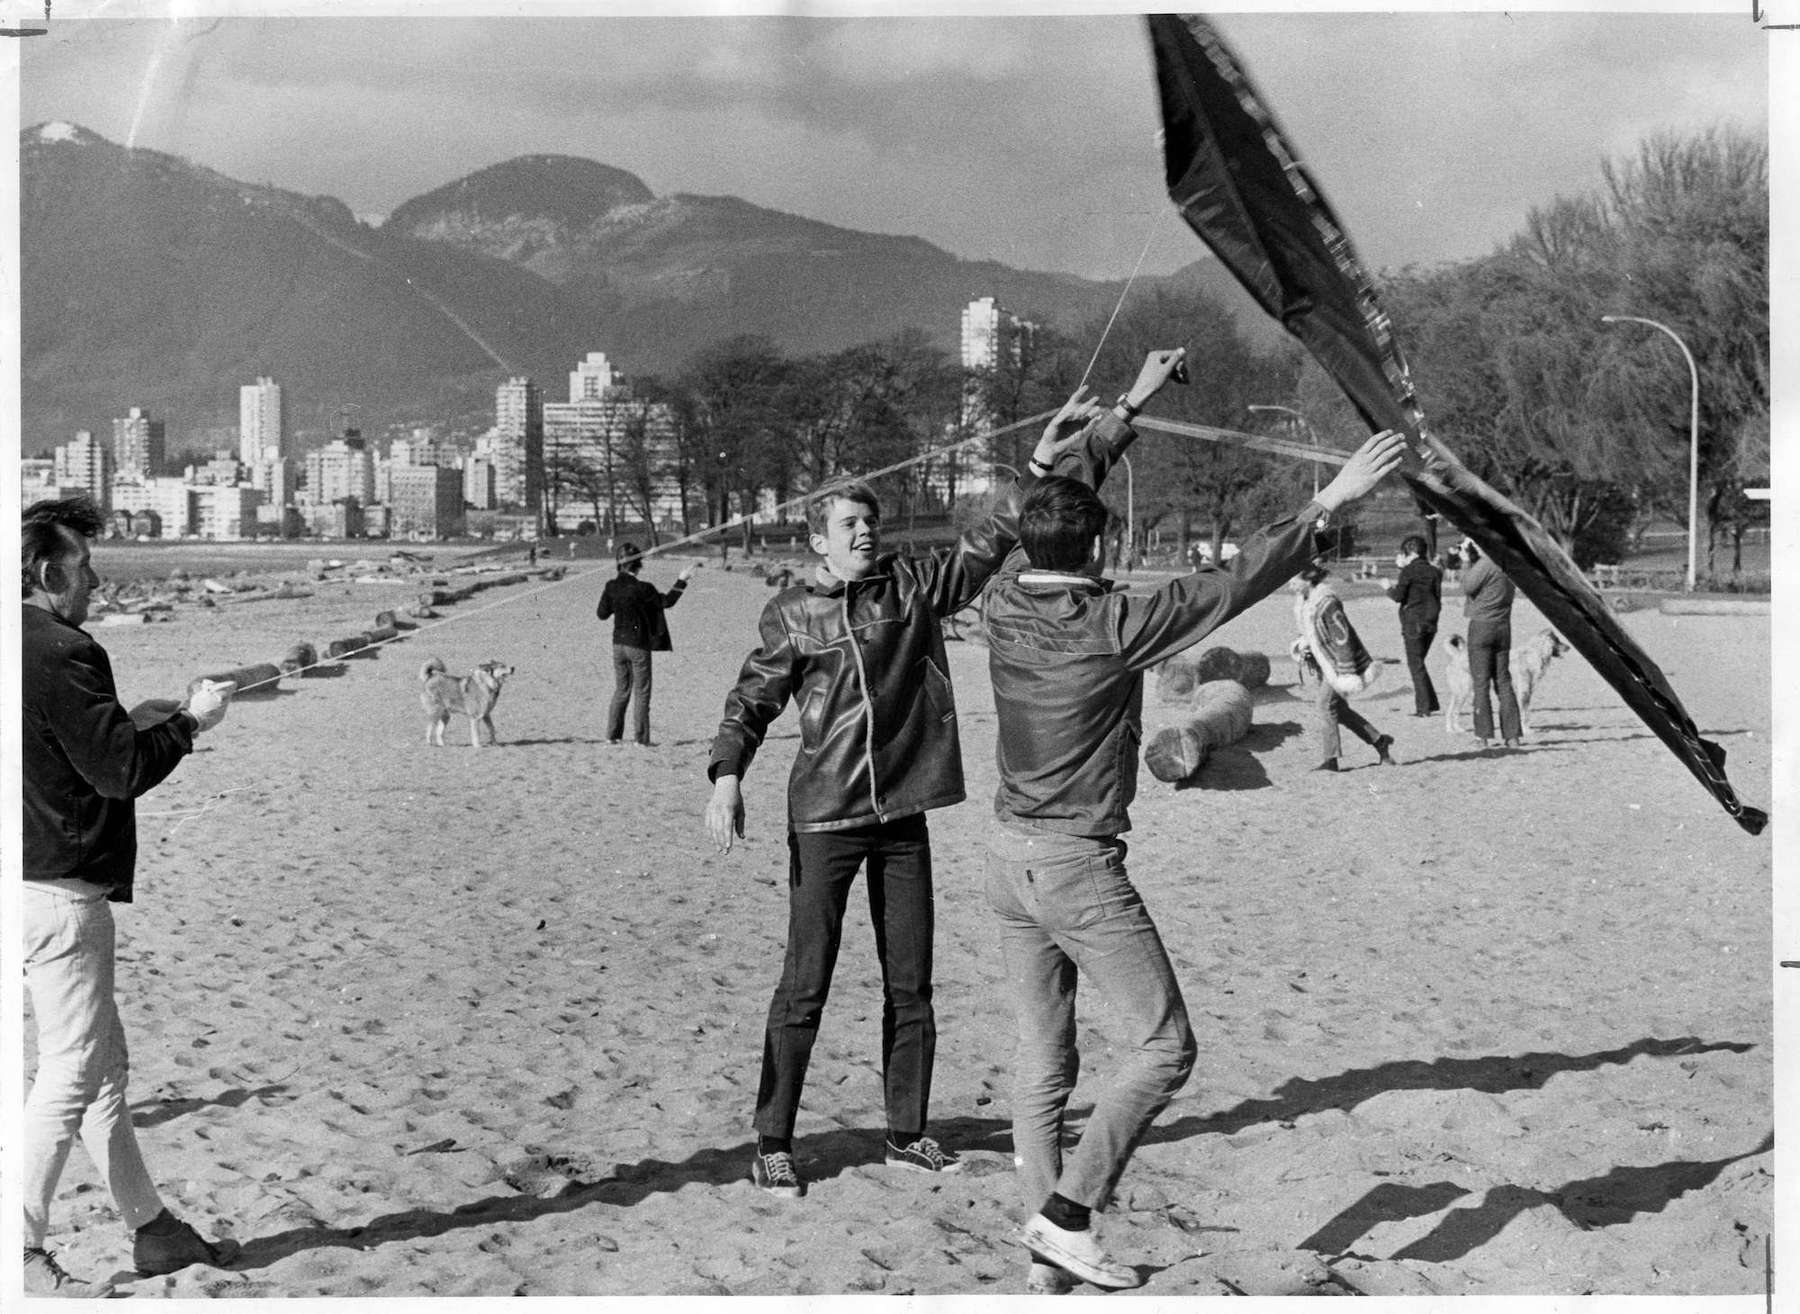 1970 - Ted Rawson flying kite on Kitsilano Beach